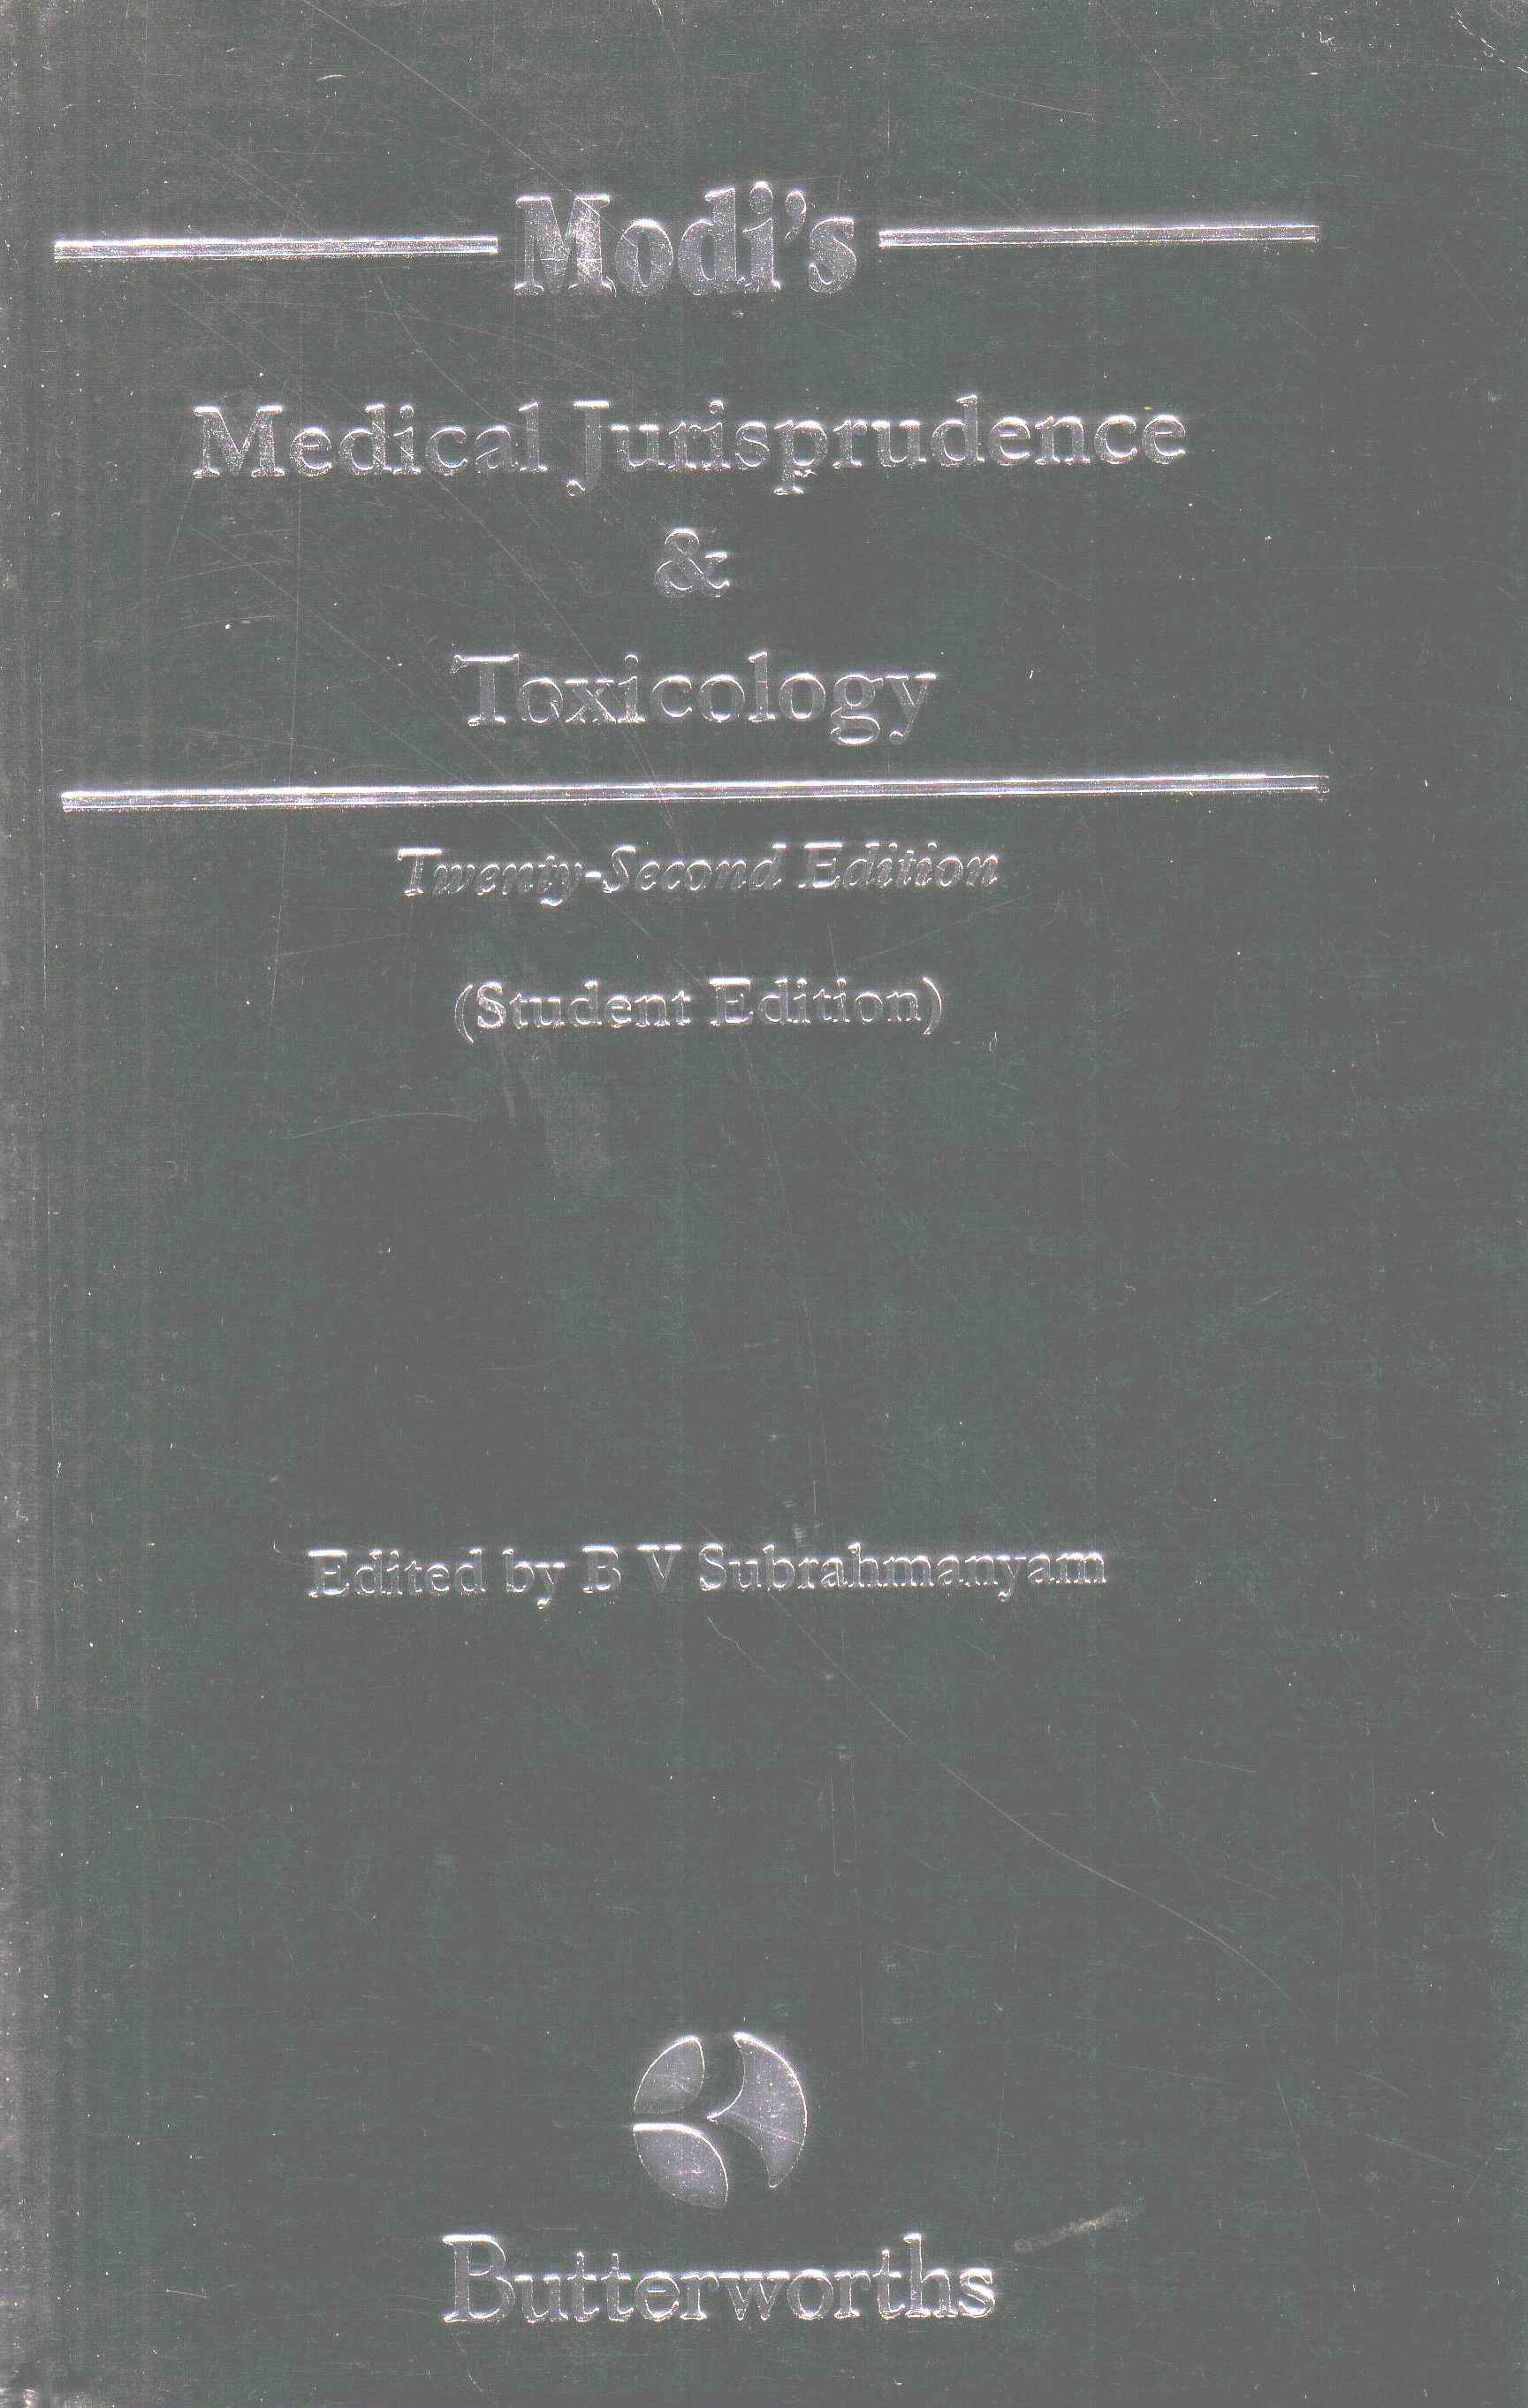 Modi's Medical Jurisprudence & Toxicology, 22nd Edition Edited by B.V.Subrahmanyam